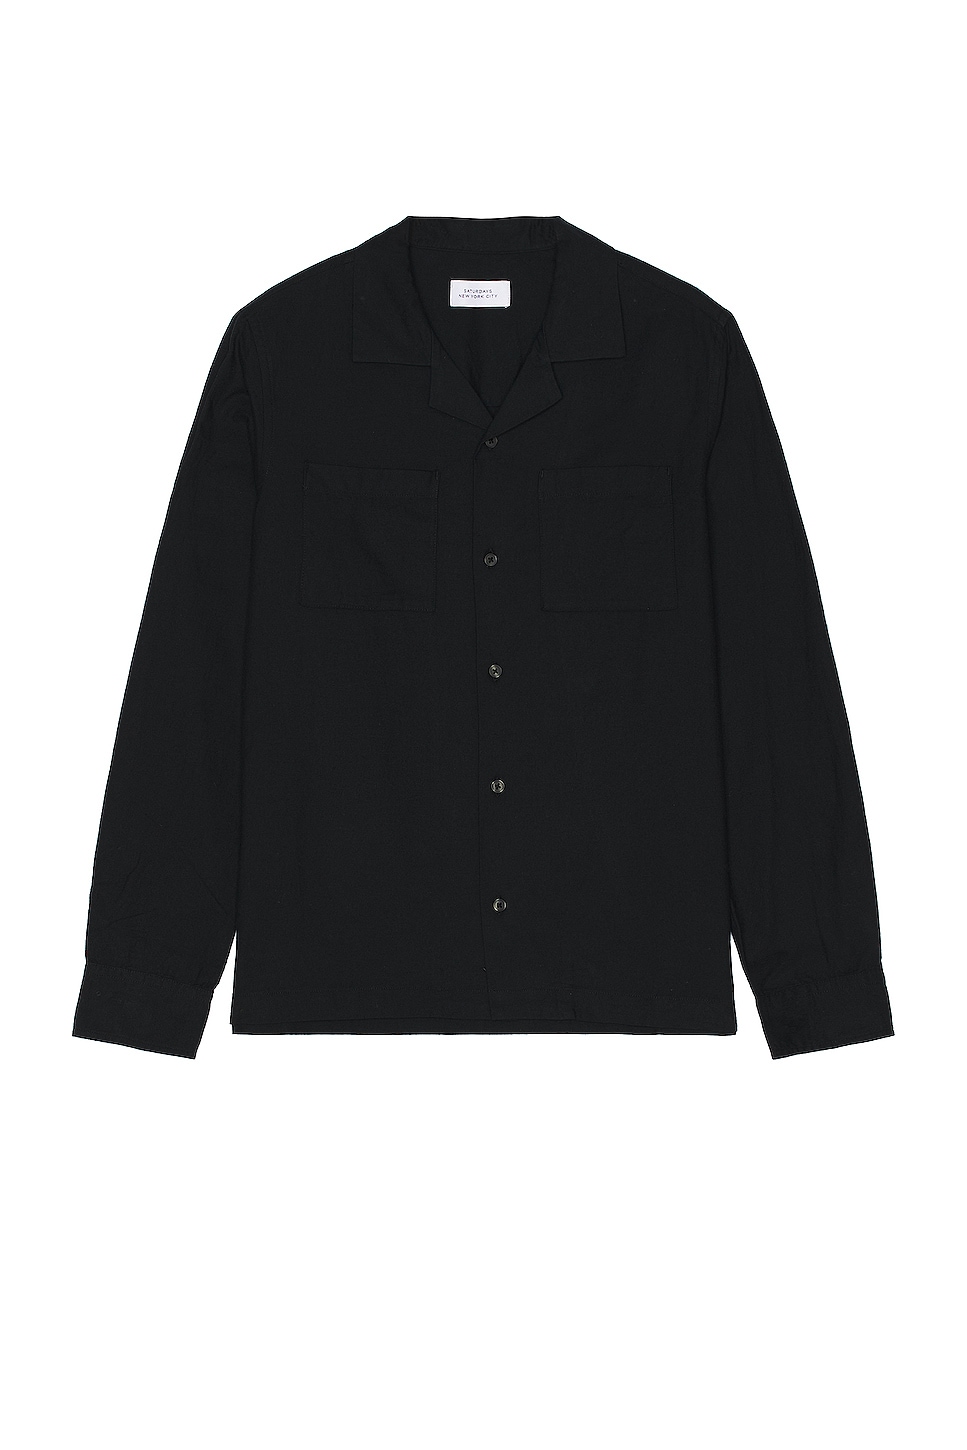 Image 1 of SATURDAYS NYC Marco Wool Shirt in Black